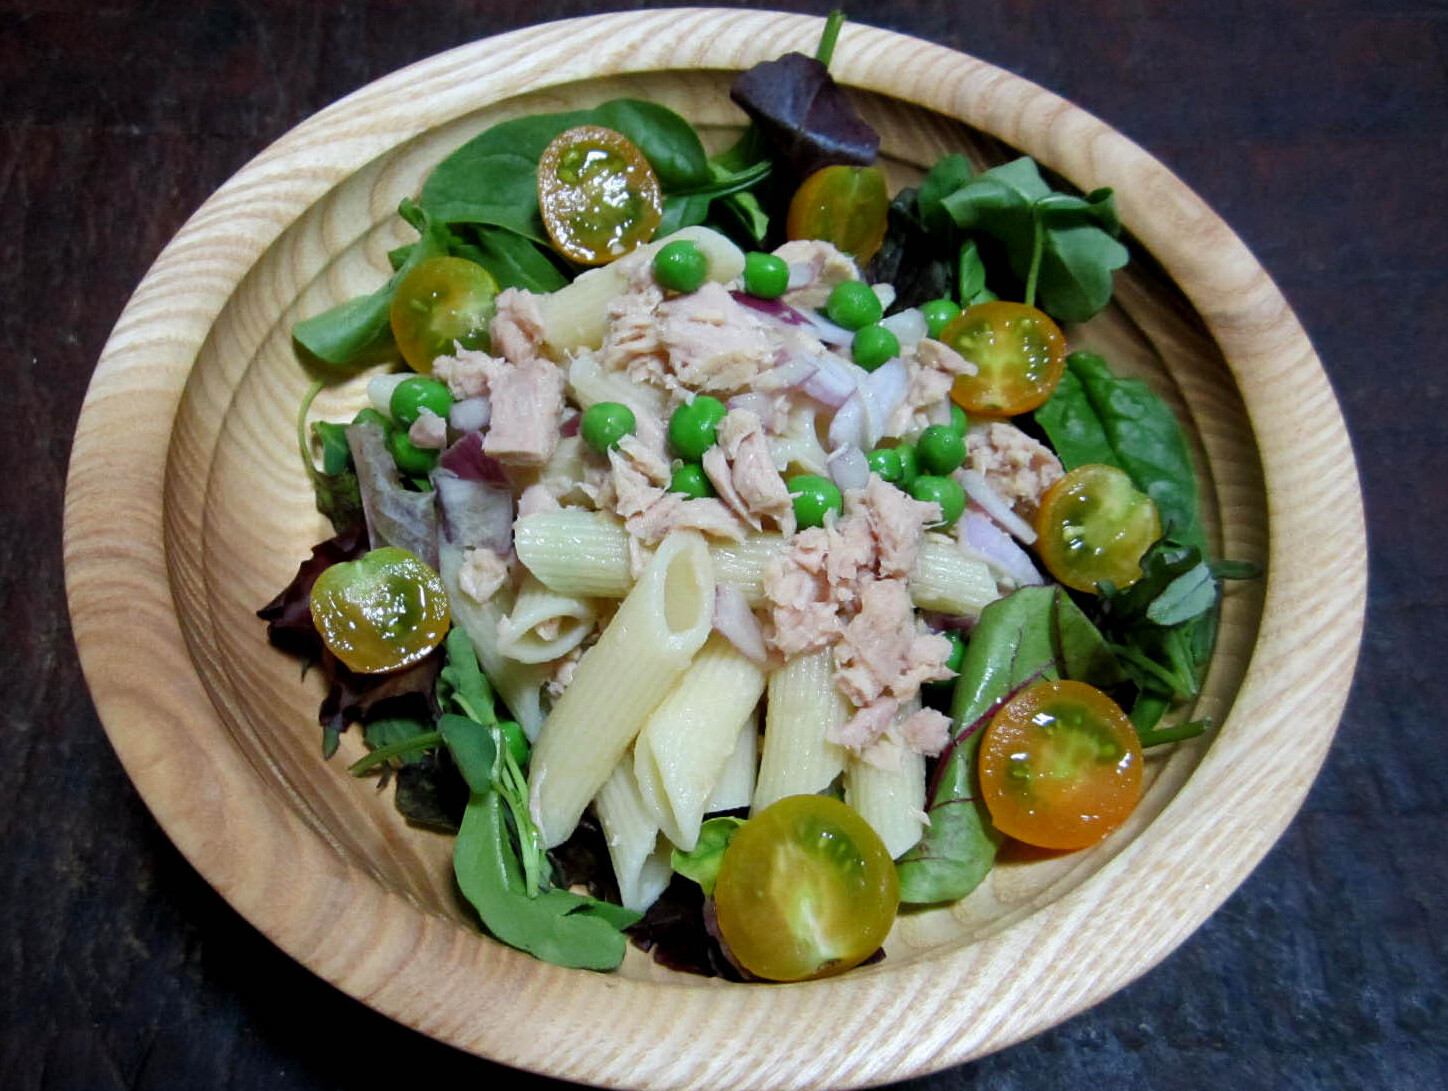 Wooden bowl of tuna pasta salad